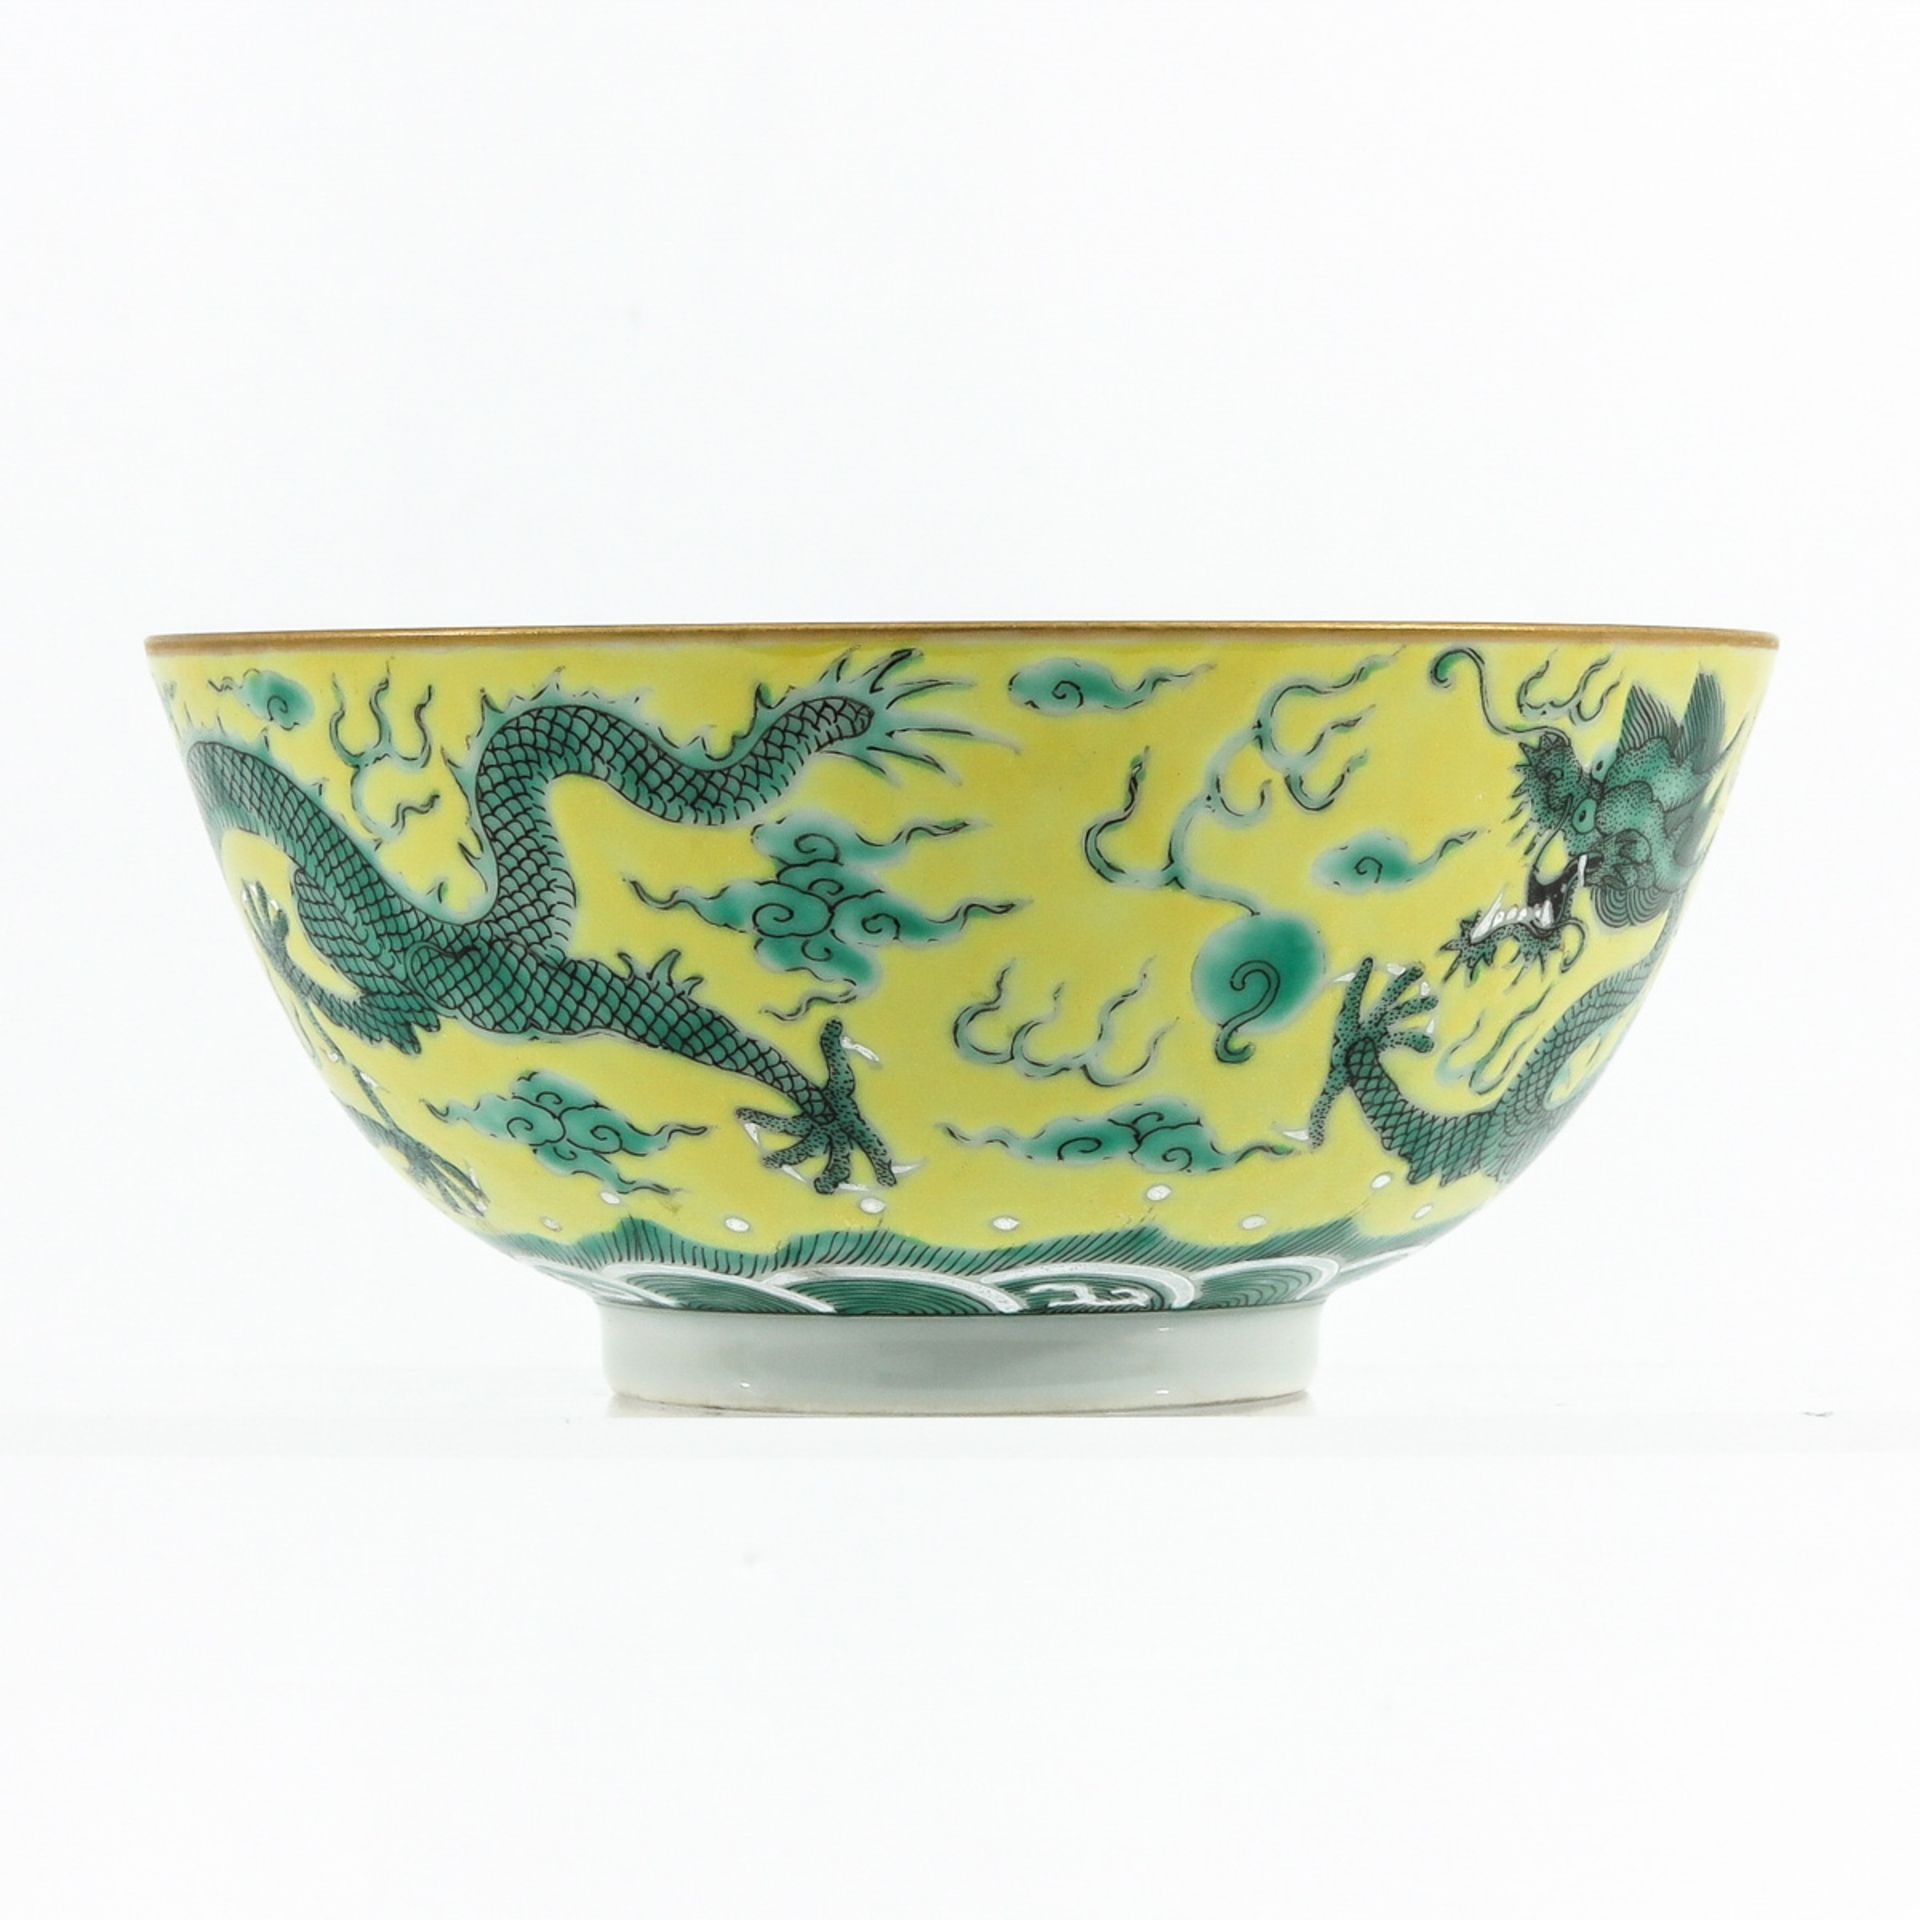 A Dragon Decor Bowl - Image 2 of 9